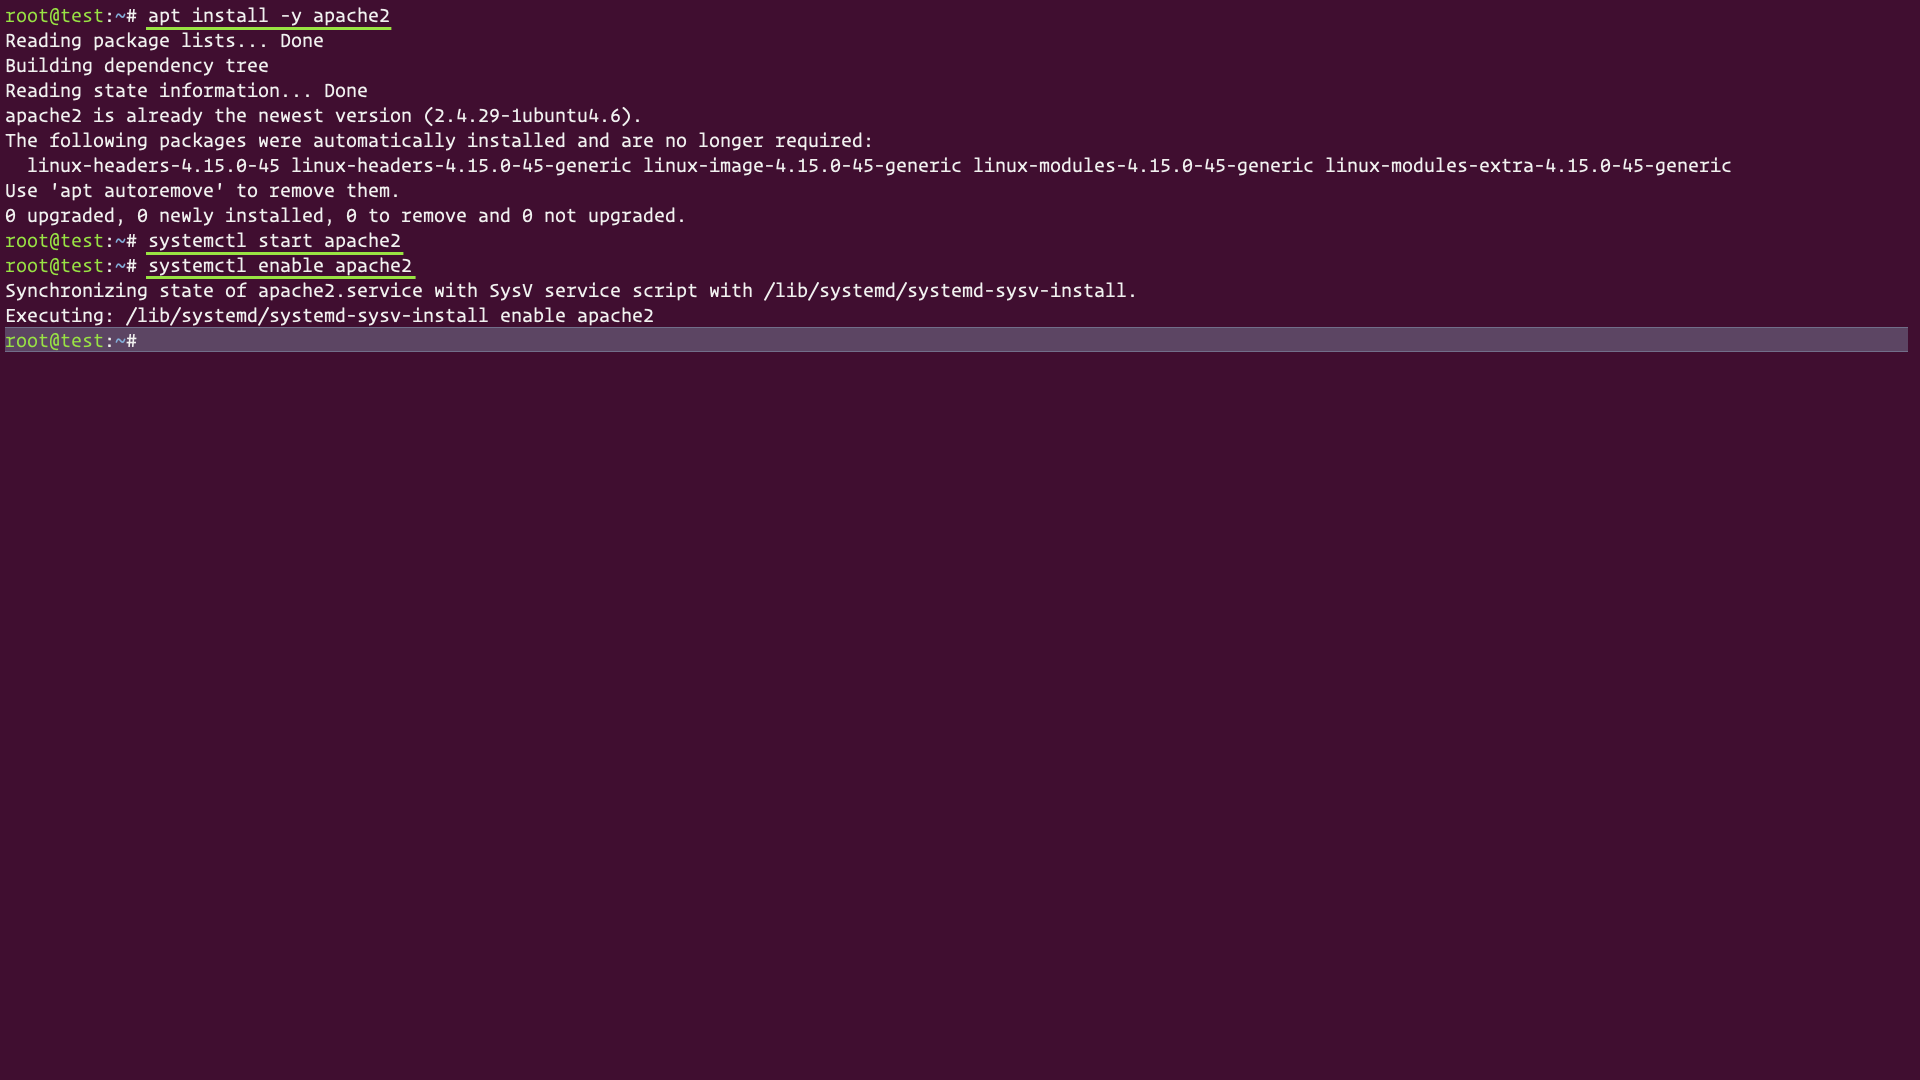 Install varnish 5 on ubuntu 18.04 windows 7